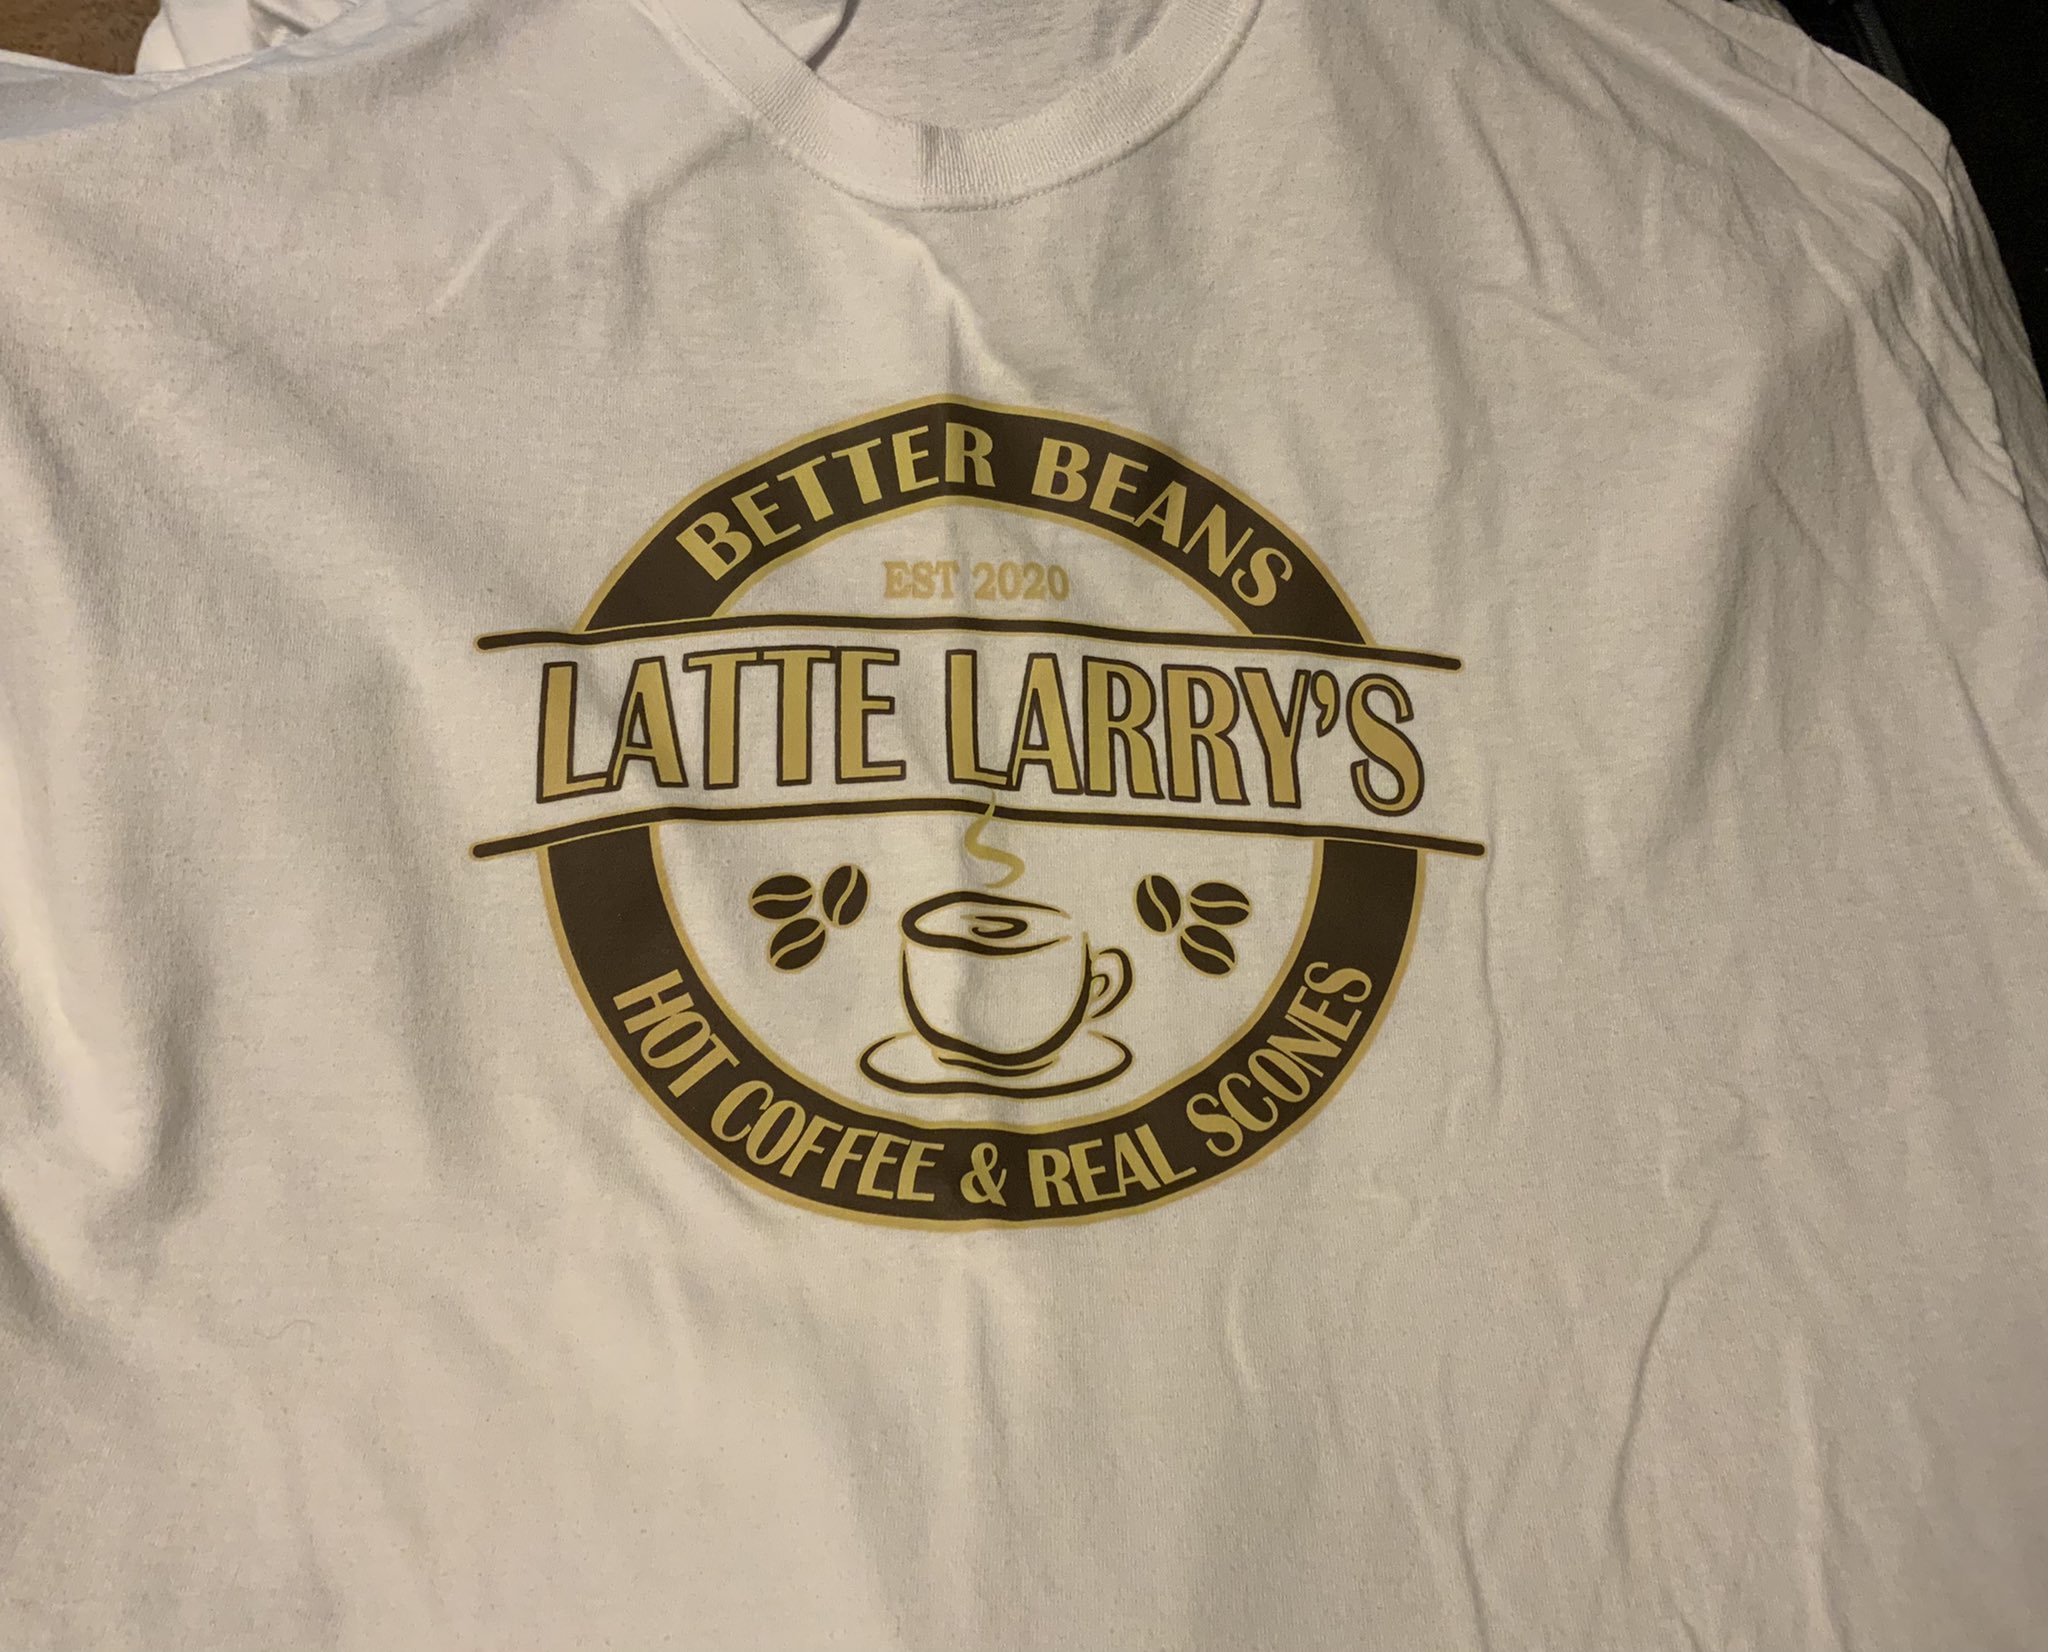 Wearing my Latte Larry s shirt today, happy birthday Larry David! 